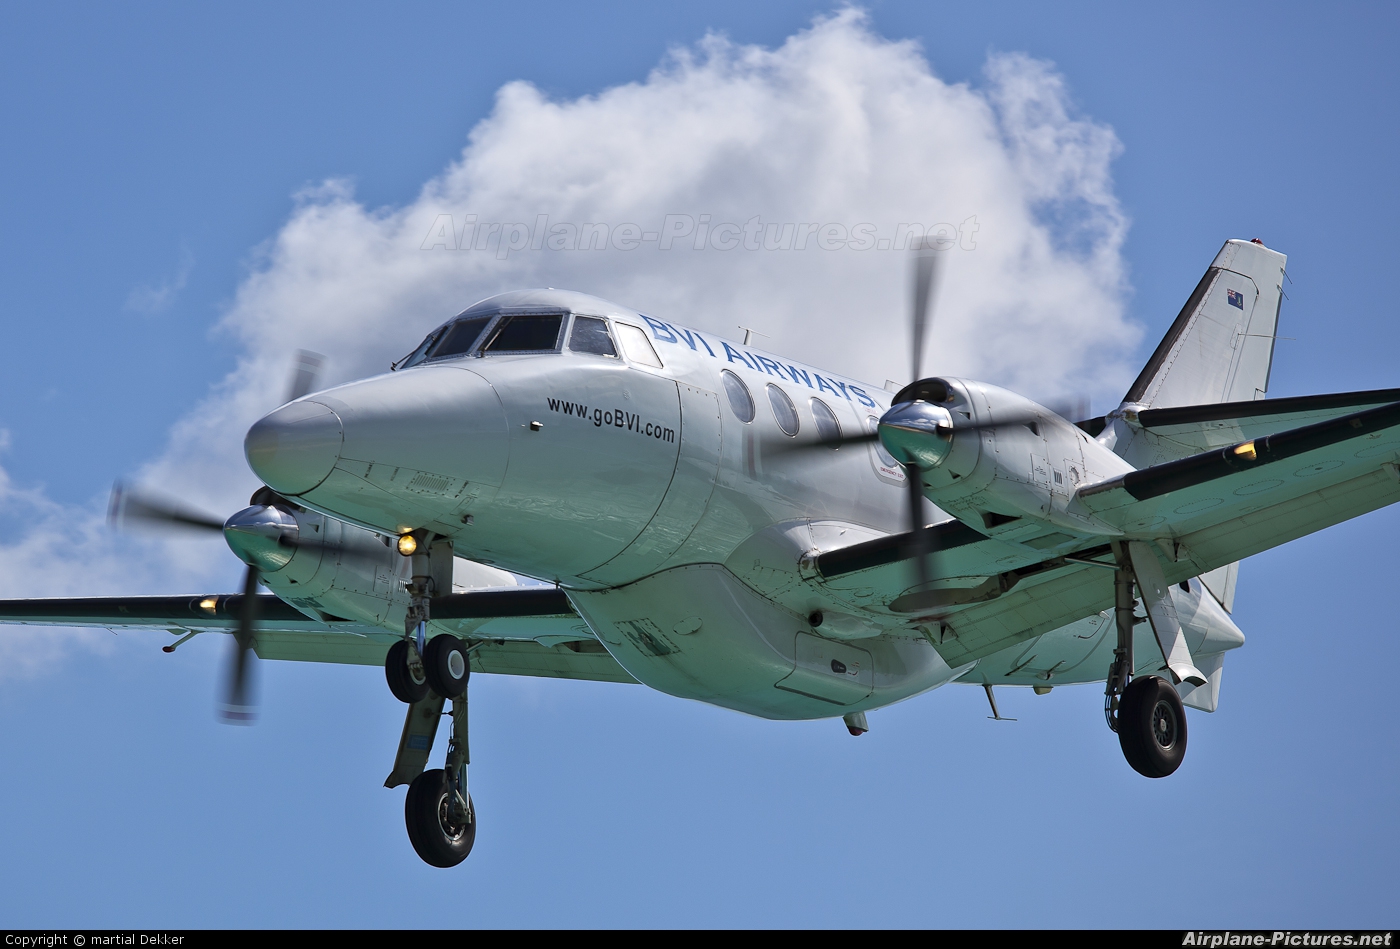 BVI Airways N487UE aircraft at Sint Maarten - Princess Juliana Intl